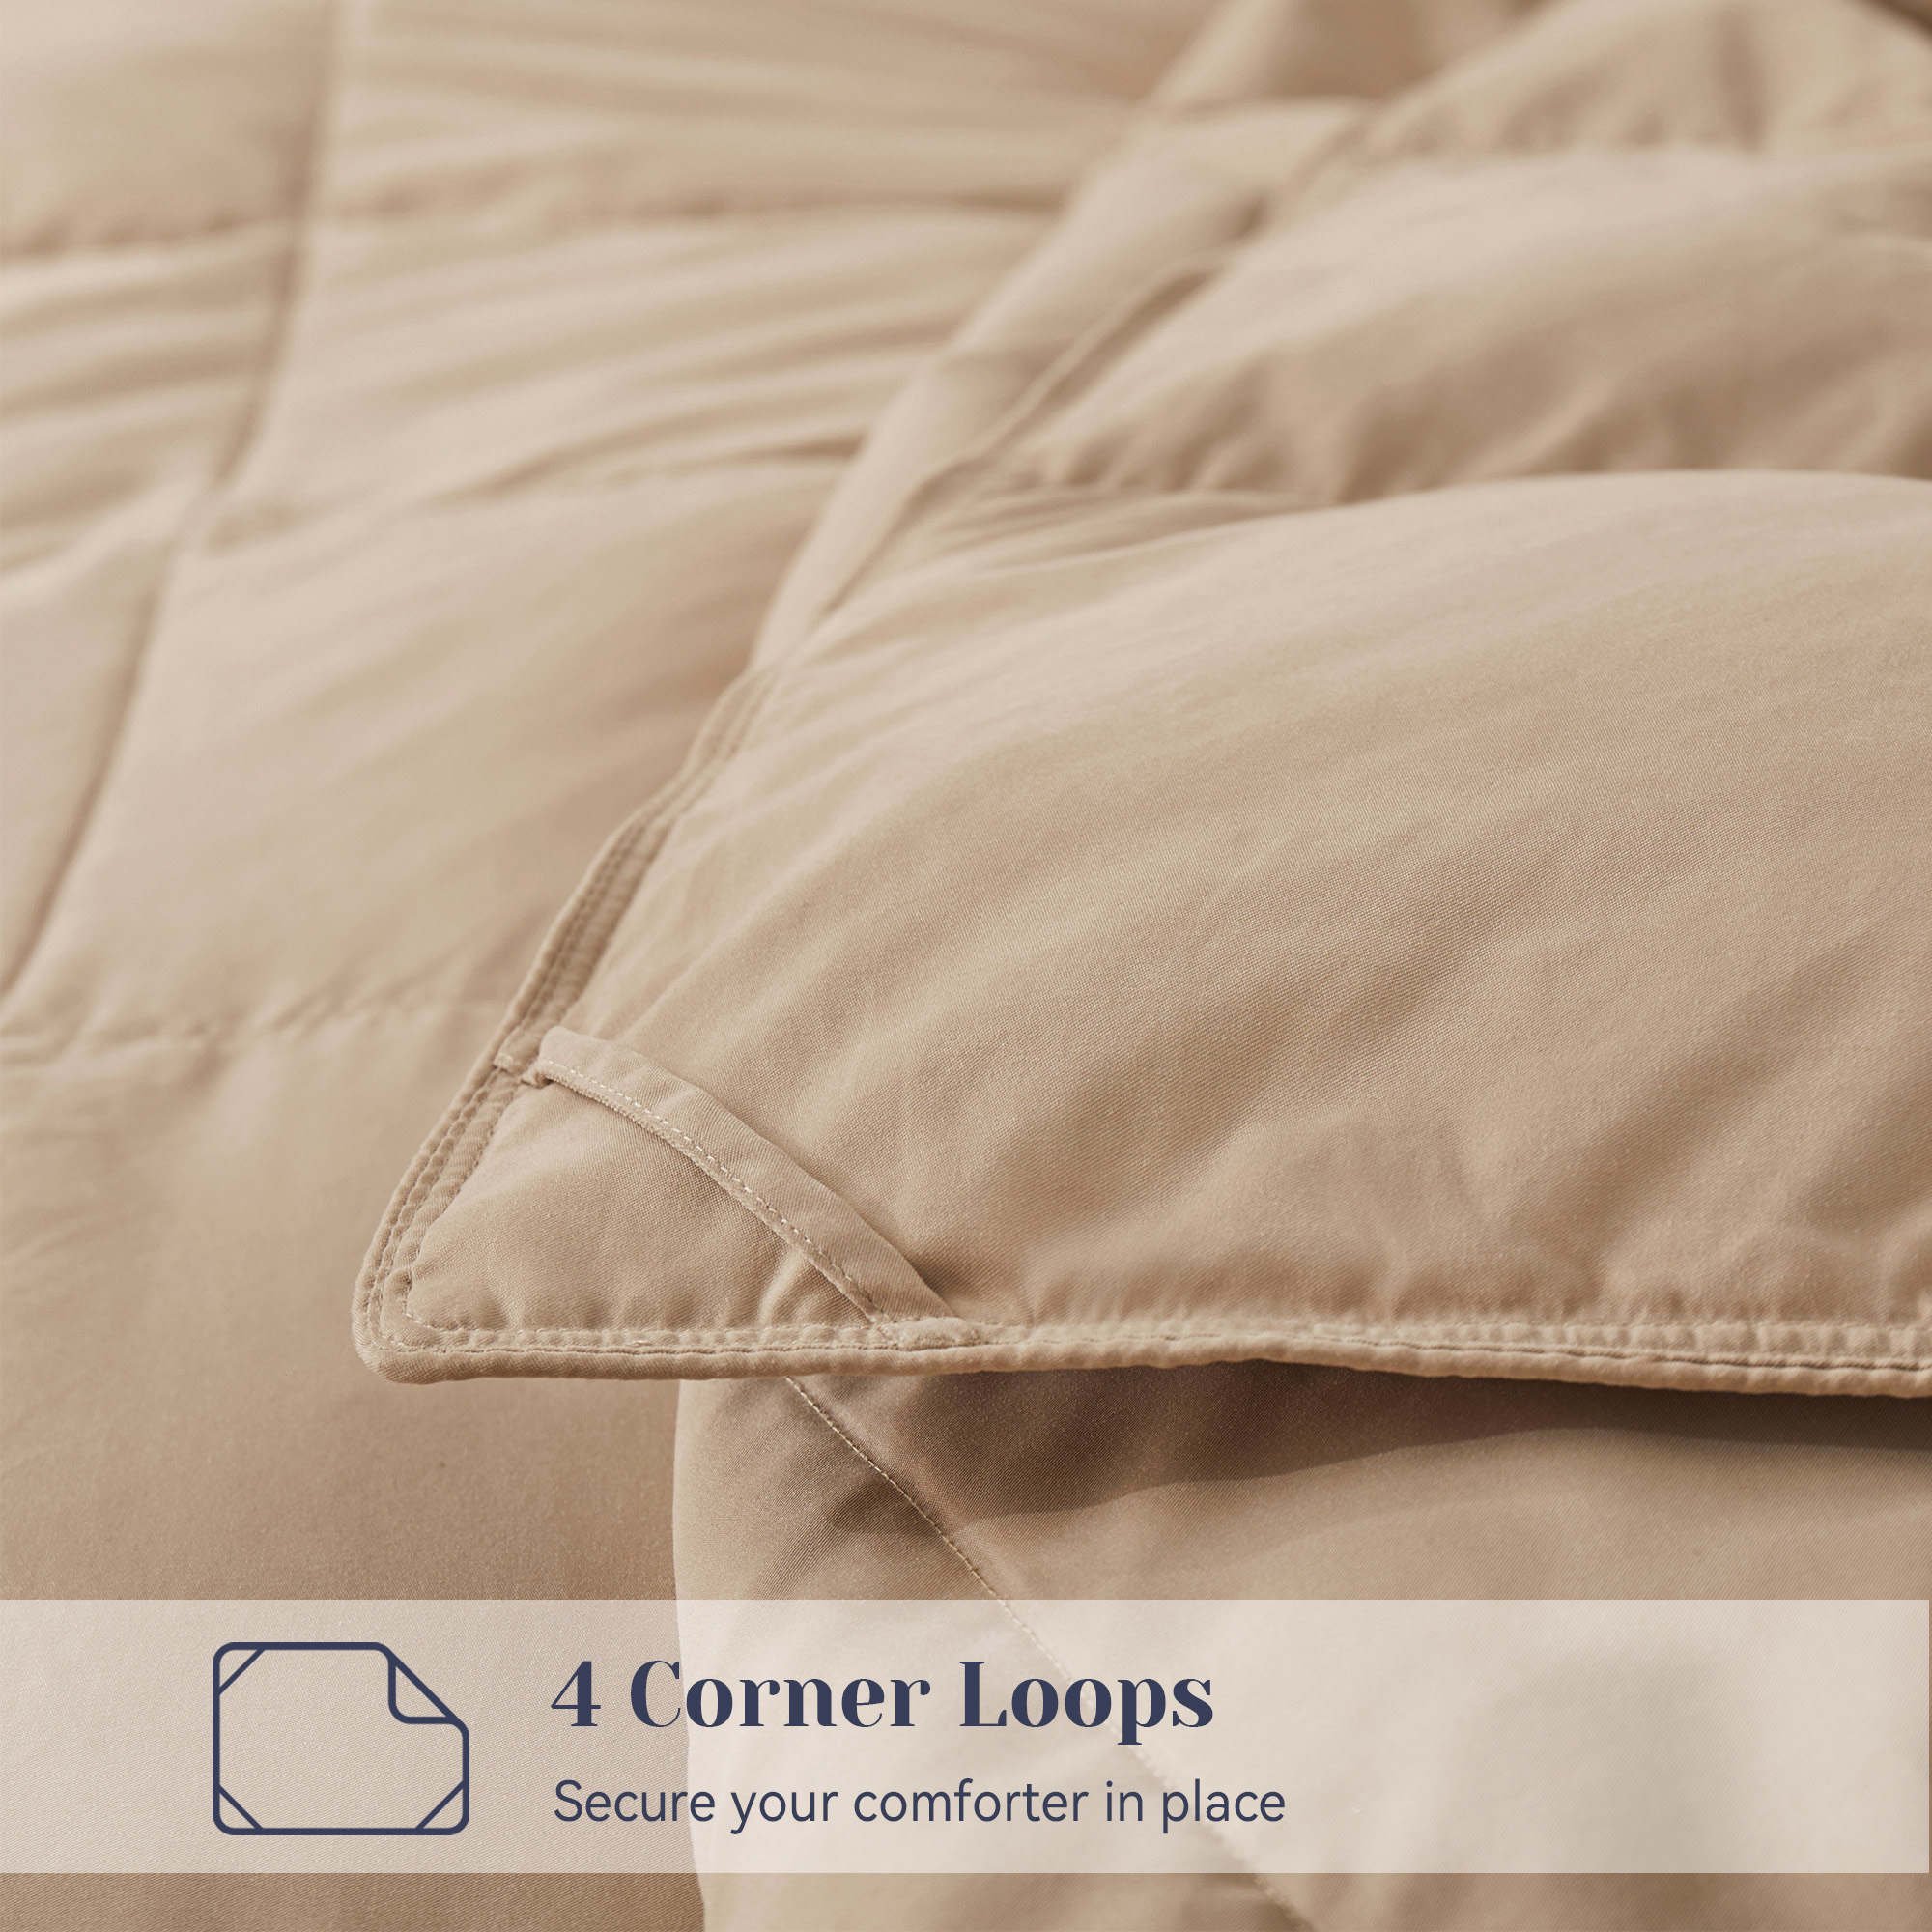 Lightweight Goose Down Feather Fiber Comforter, Soft And Fluffy Comforter For Restful Sleep - Full/Queen